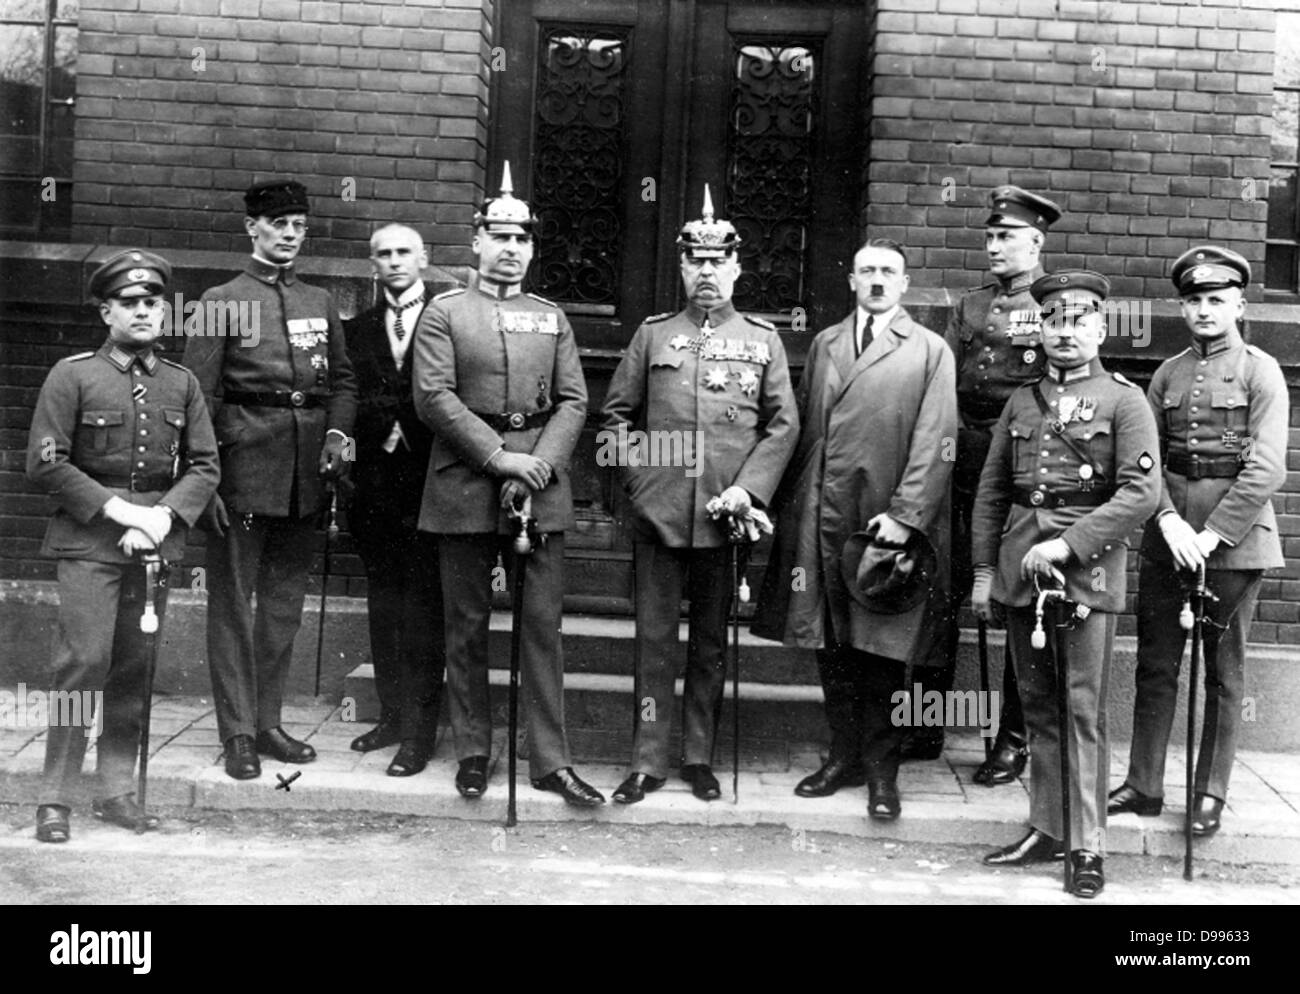 From left to right: Heinz Pernet, Dr. Friedrich Weber, Wilhelm Frick, Hermann Kriebel, Erich Ludendorff, Adolf Hitler, Ernst Röhm, Wilhelm Brückner, Robert Wagner. Stock Photo